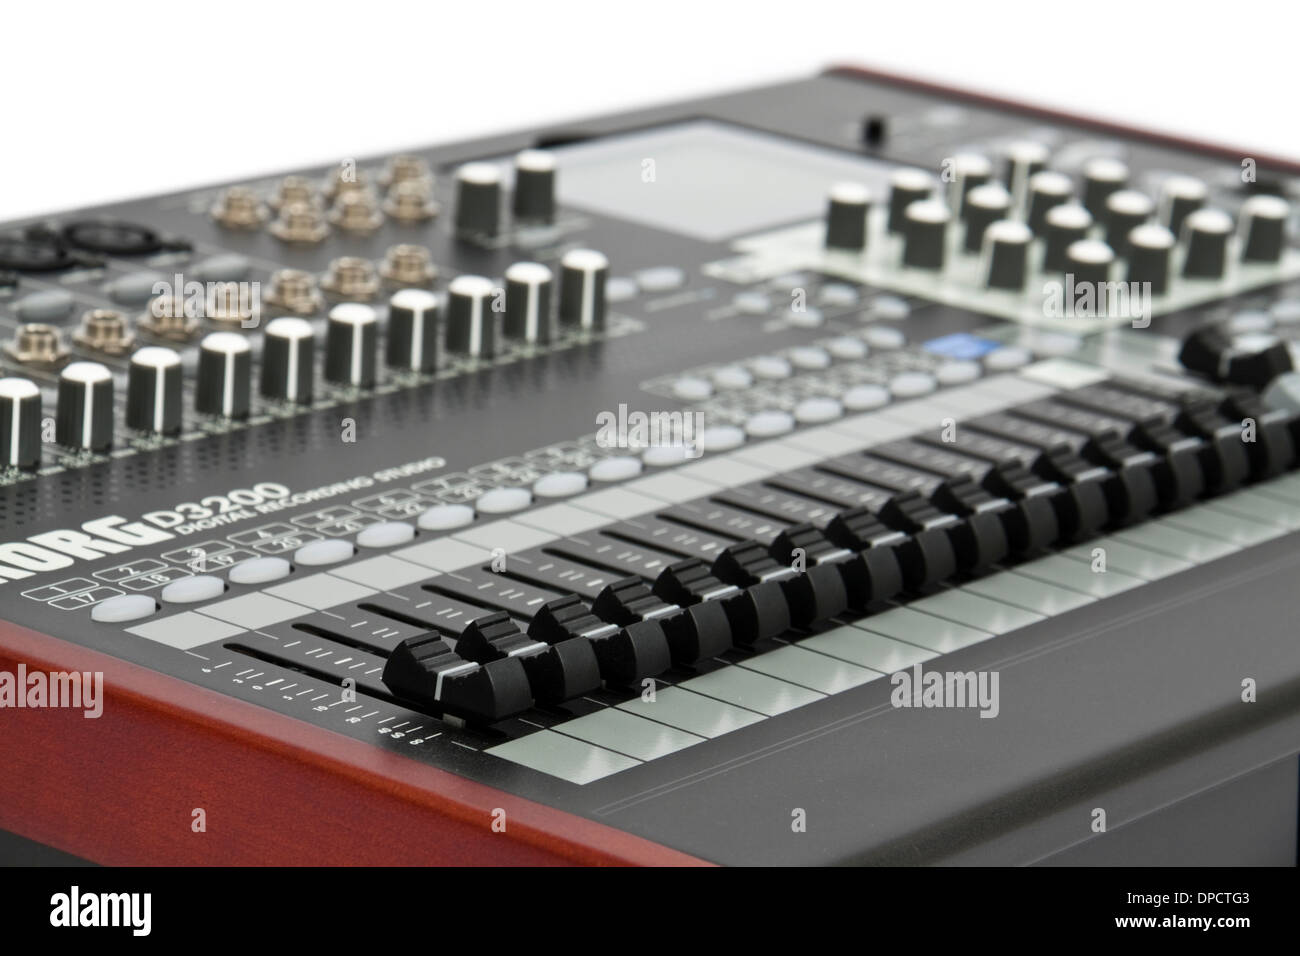 Korg D3200 Digital Recording Studio Stock Photo - Alamy